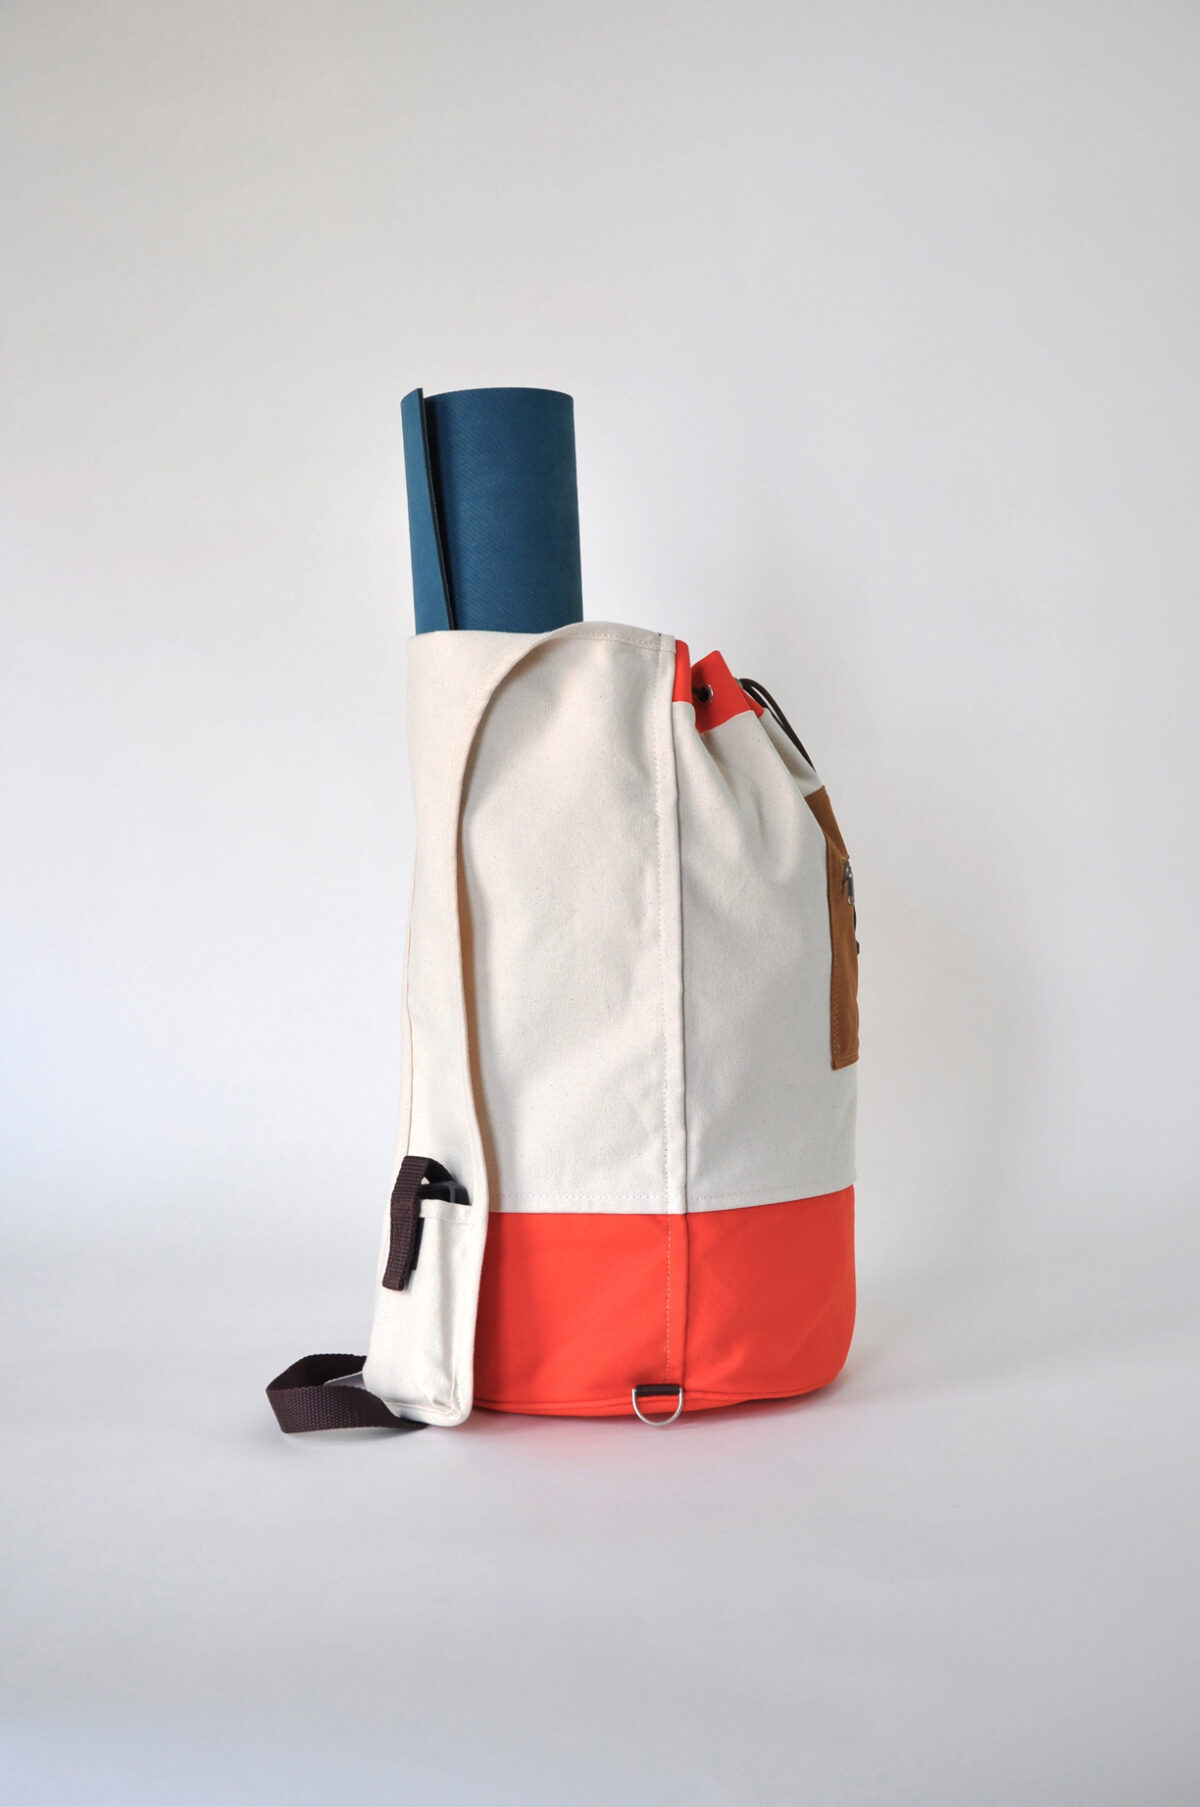 Jueshanzj Adjustable Shoulder Strap Canvas Yoga Mat Bag